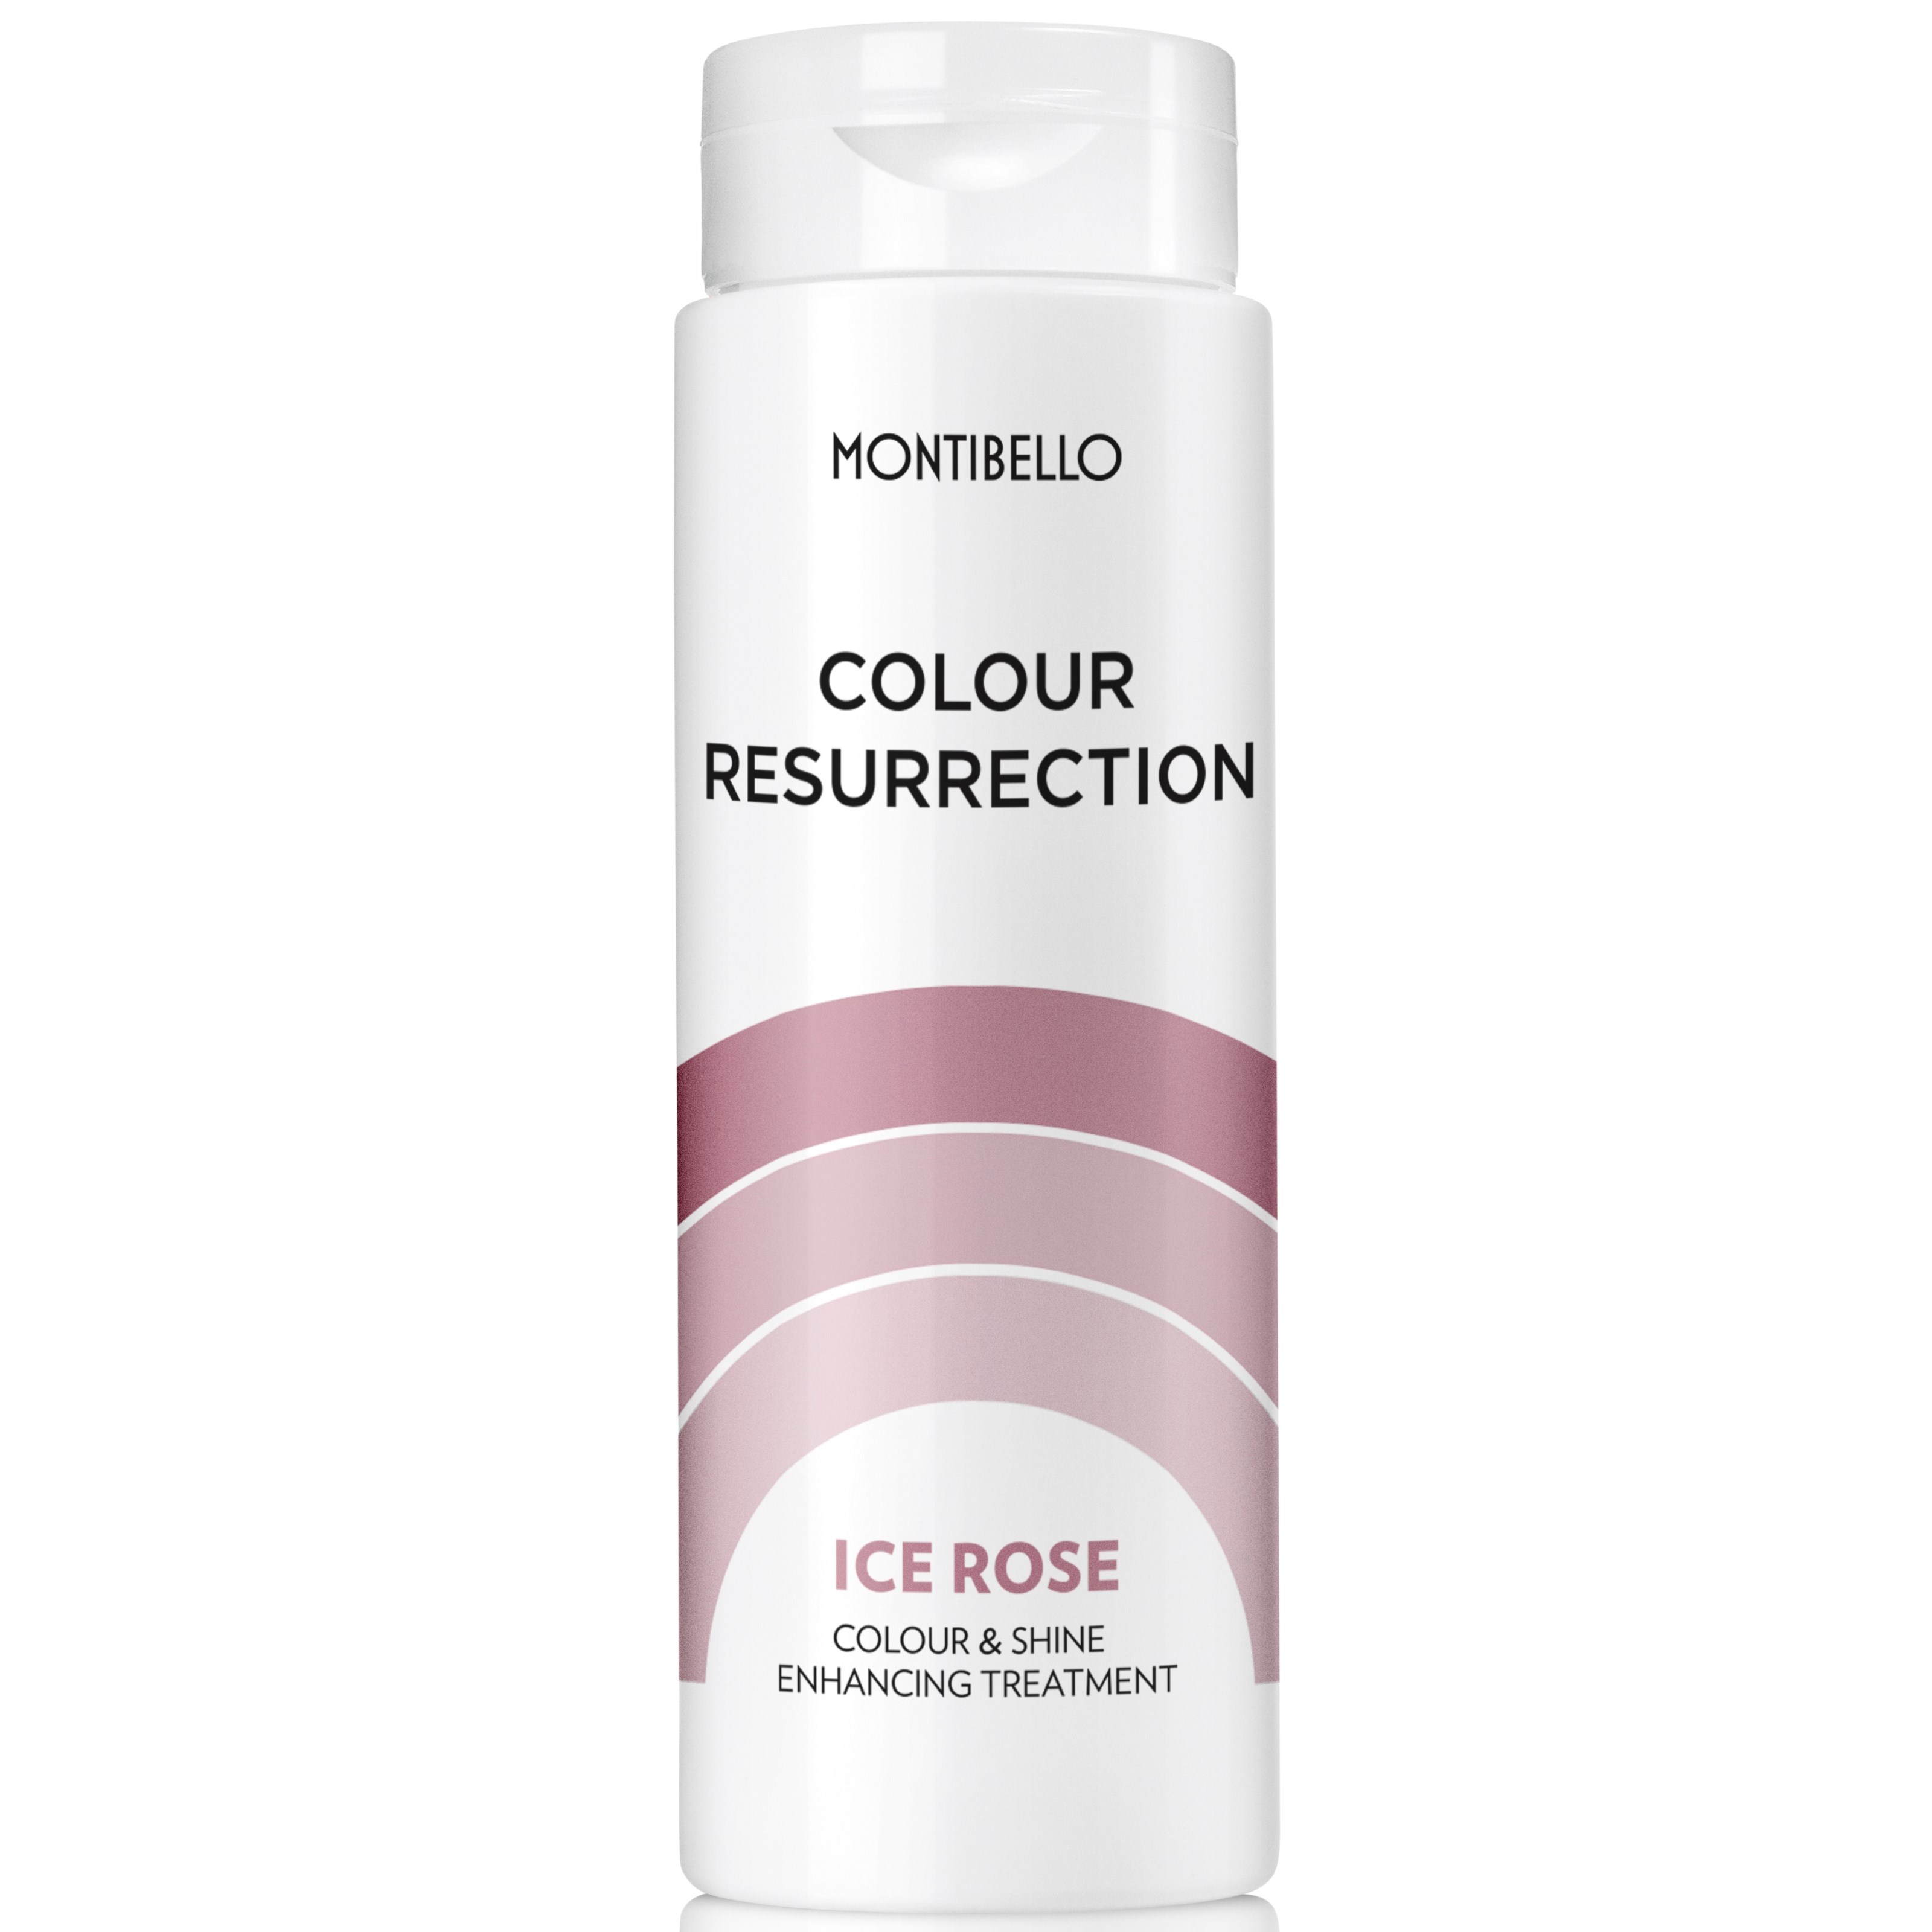 Montibello Colour Resurrection Ice Rose